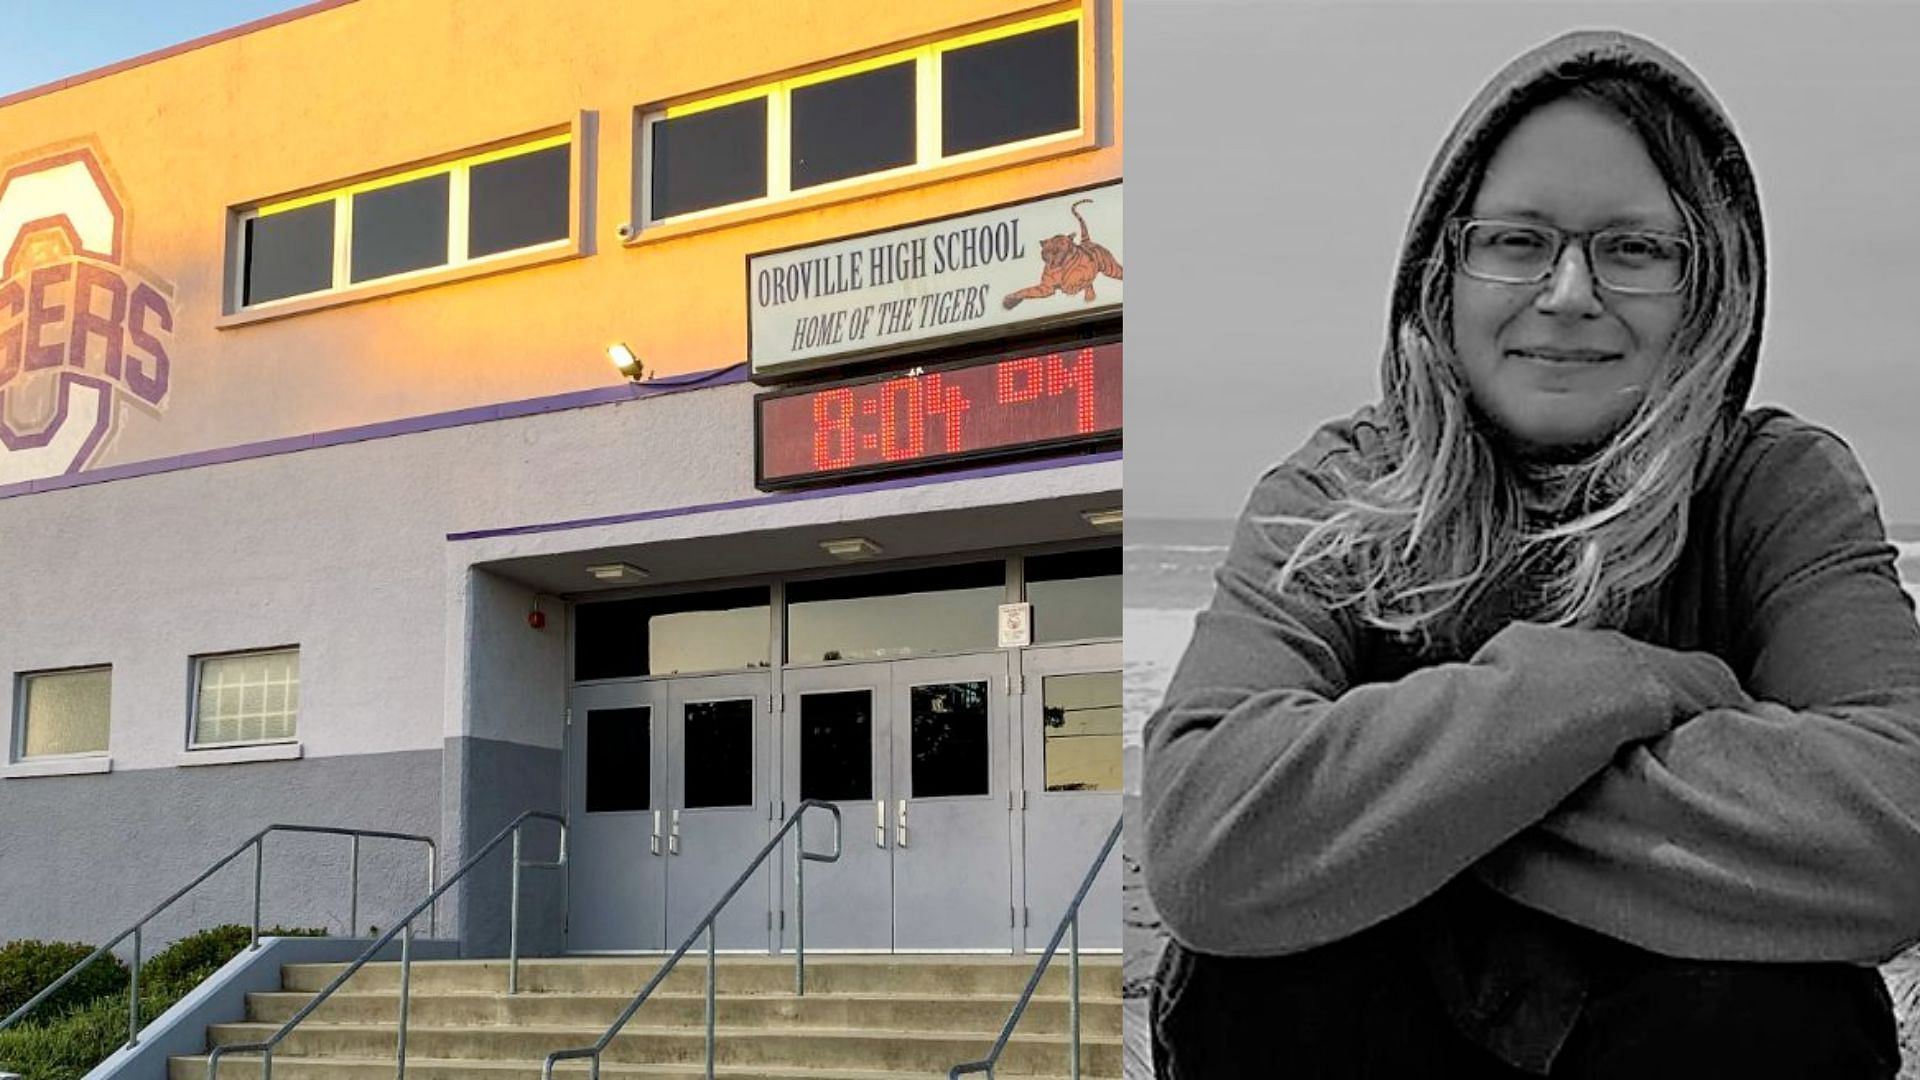 High school teacher Marta Shaffer faces heat for her linguistics approach (image via ouhsd.org and Marta Shaffer)